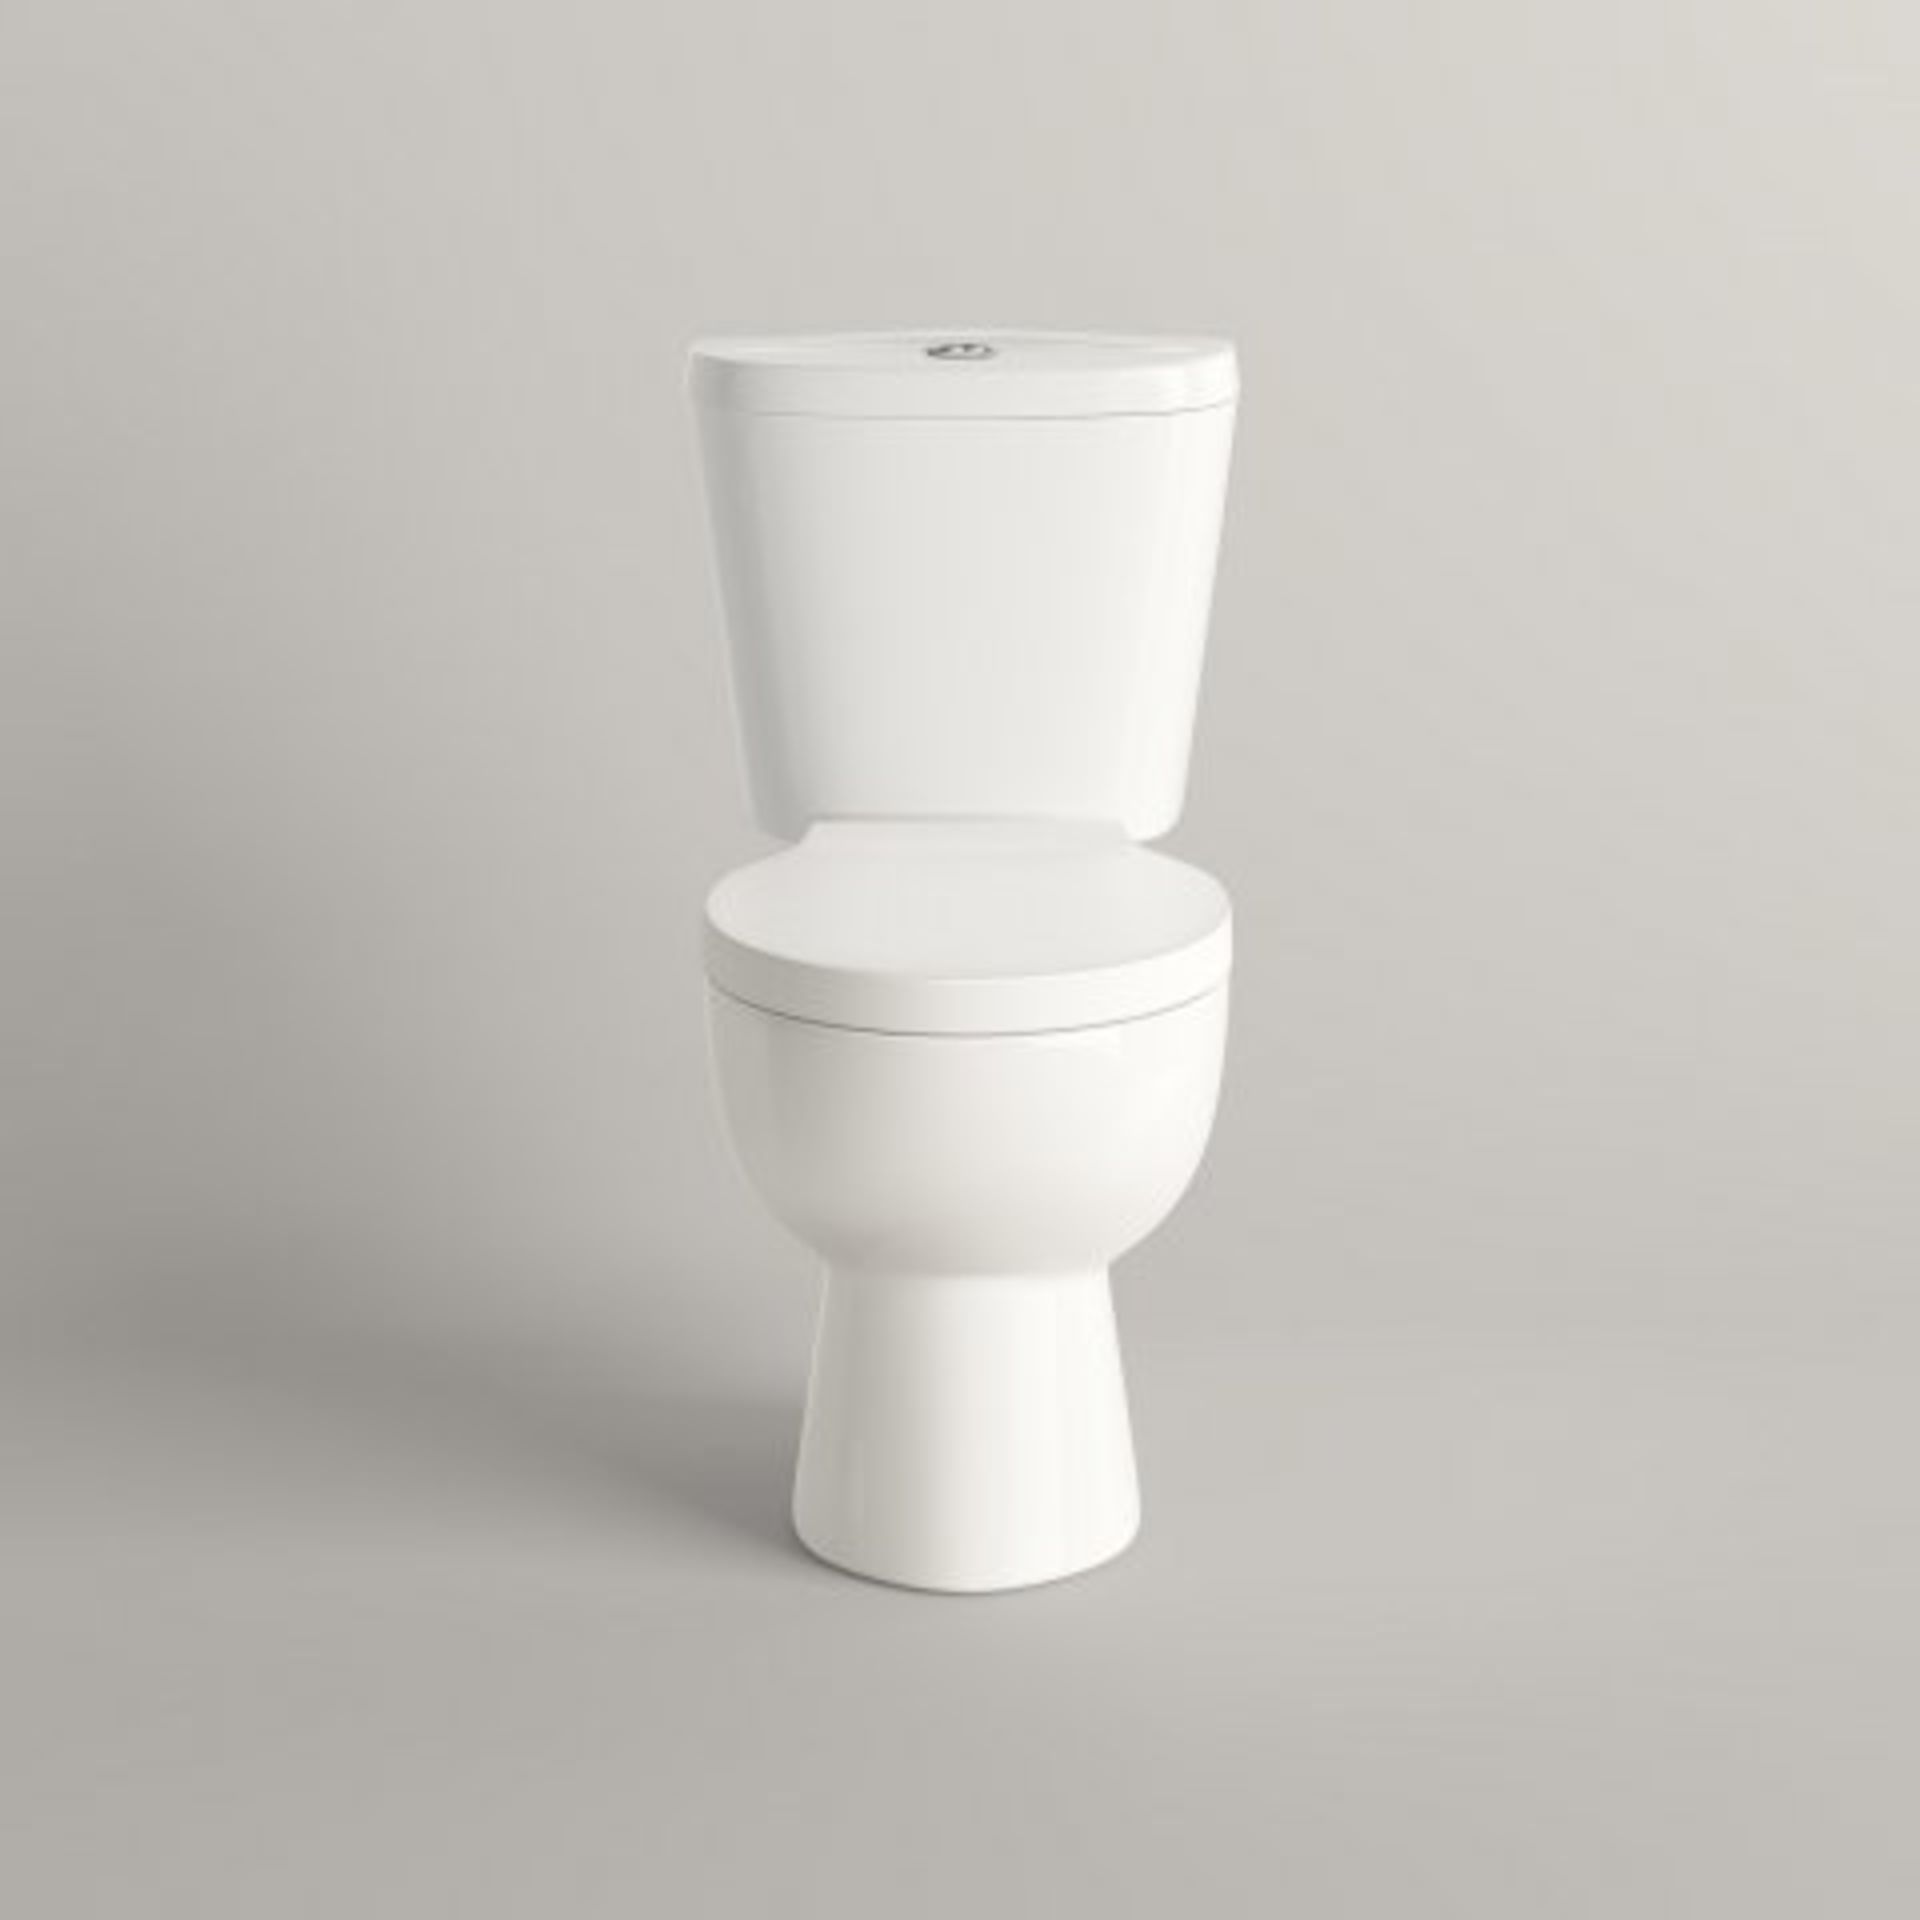 (S194) Mondella Maestro Close Coupled Toilet inc Soft Close Seat. RRP £399.99. Long Lasting - Image 3 of 3